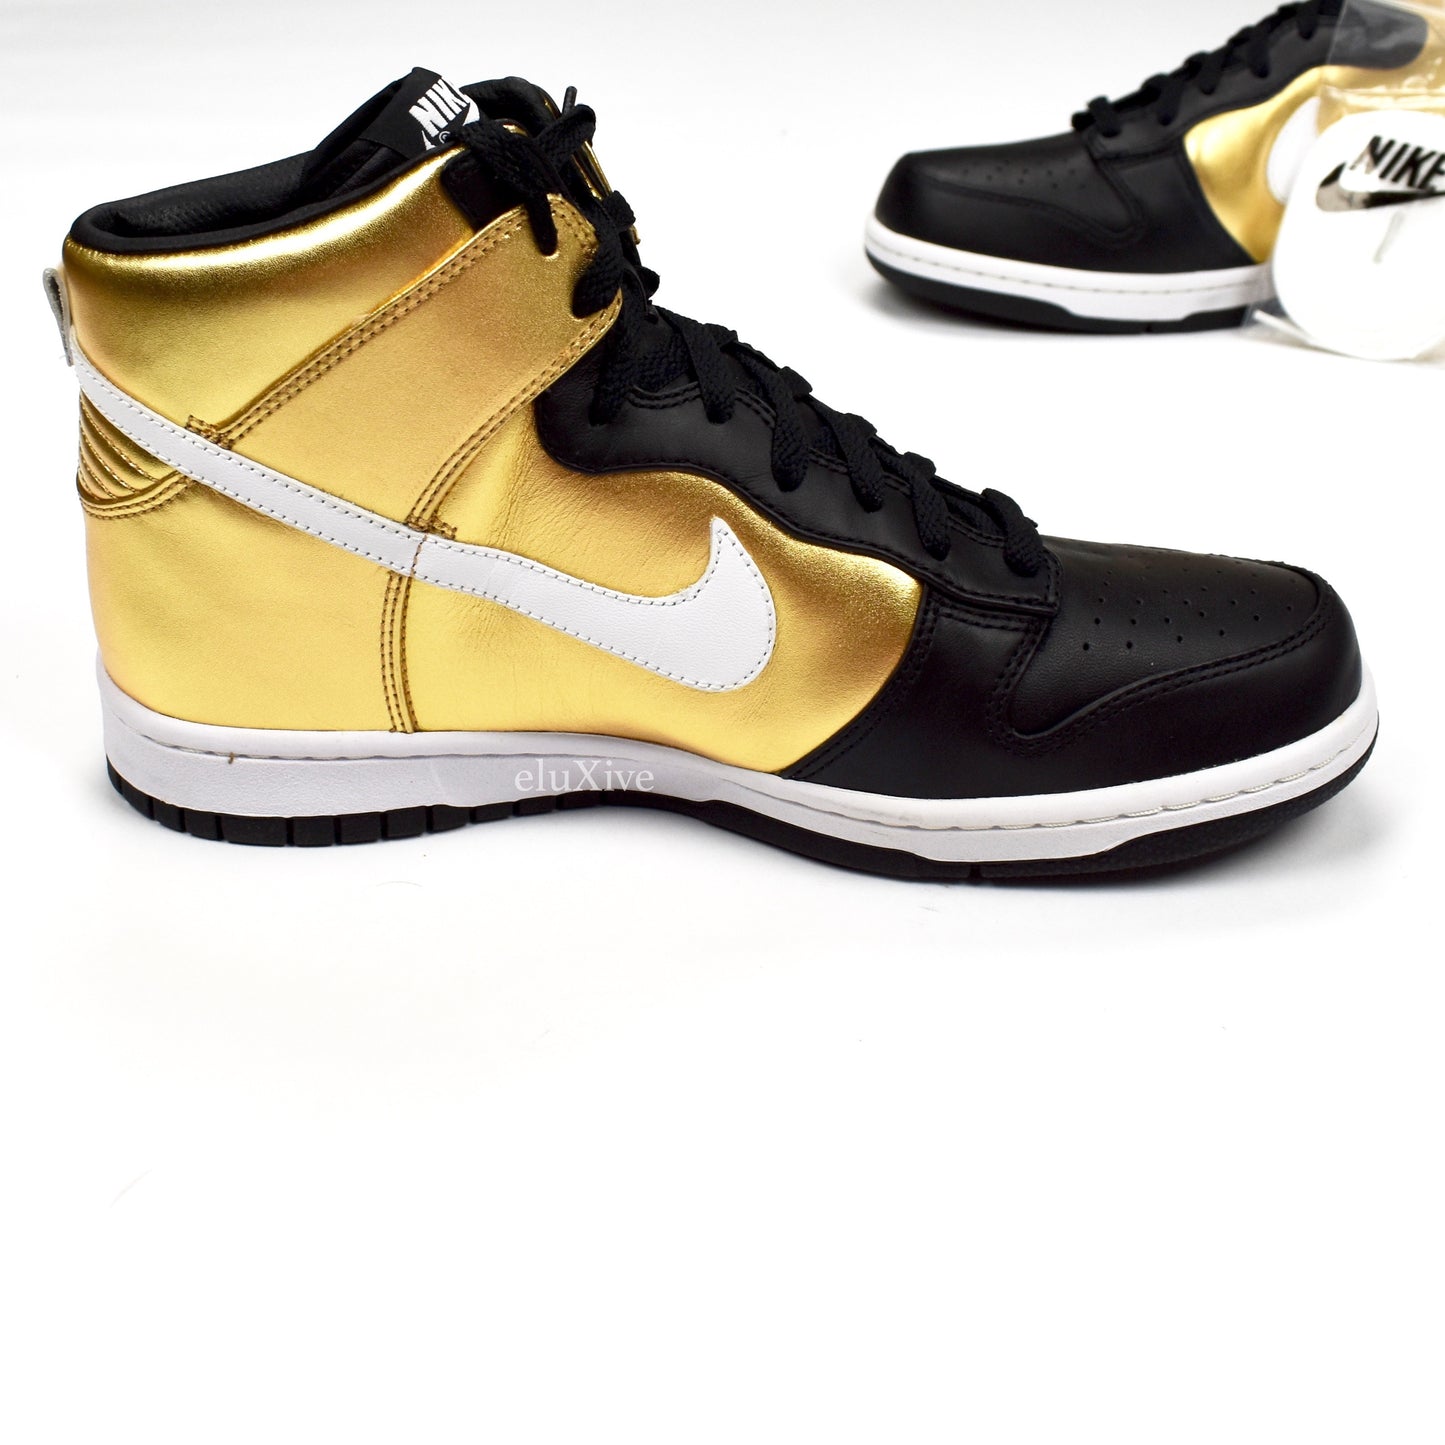 Nike - Dunk High Premium 'Gold Medal'